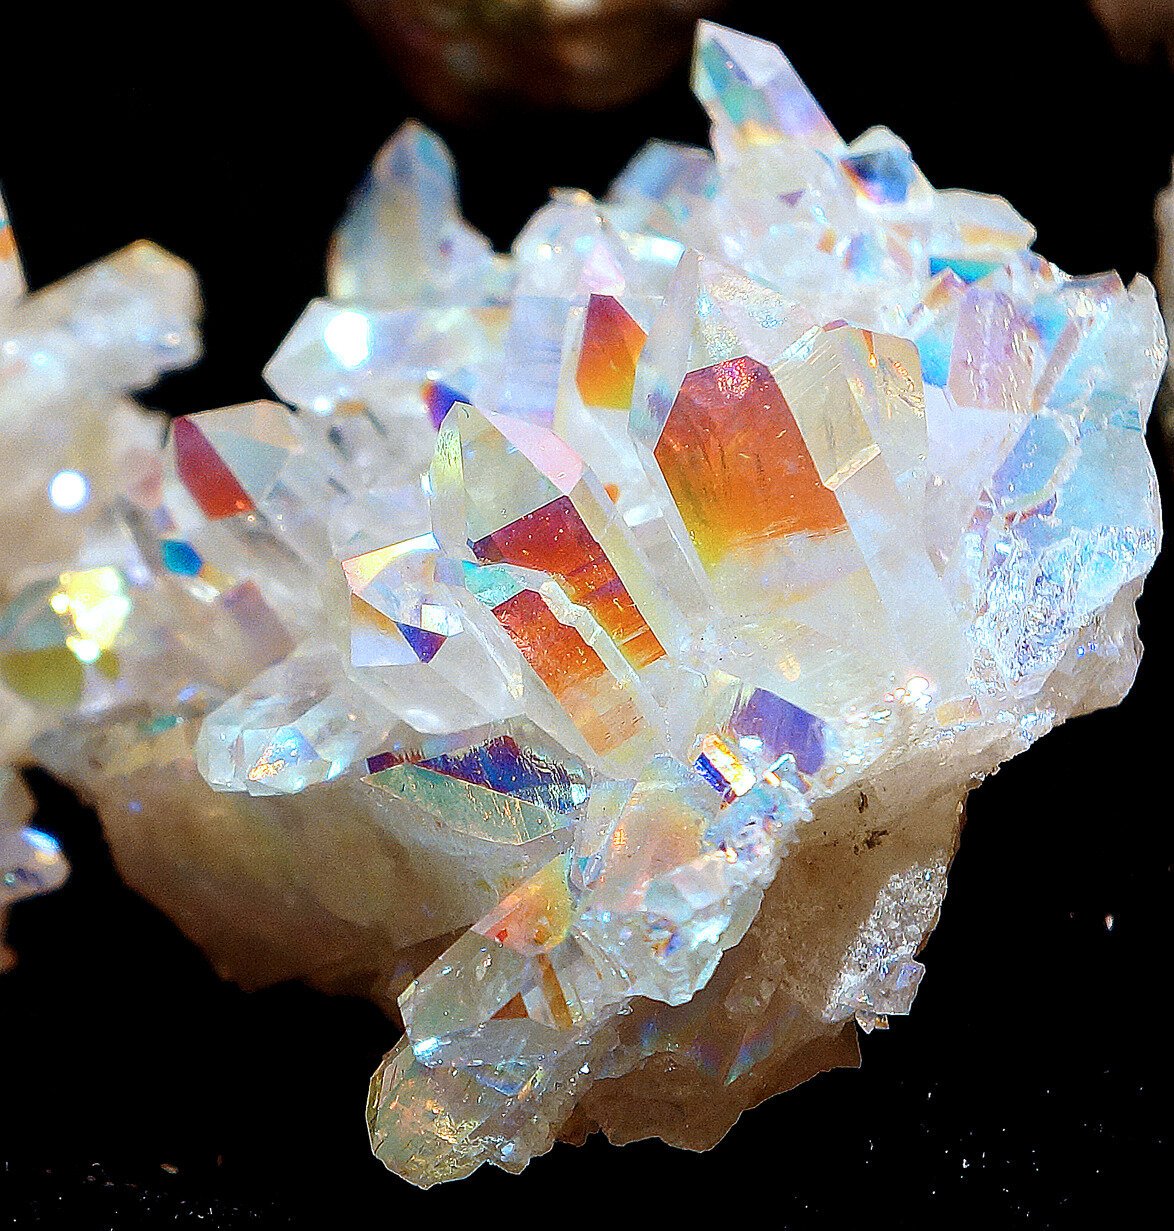 Crystal stone. Камни Самоцветы кварц. Кварц минерал горный. Кварц кристаллический минерал. Полихромный кварц.